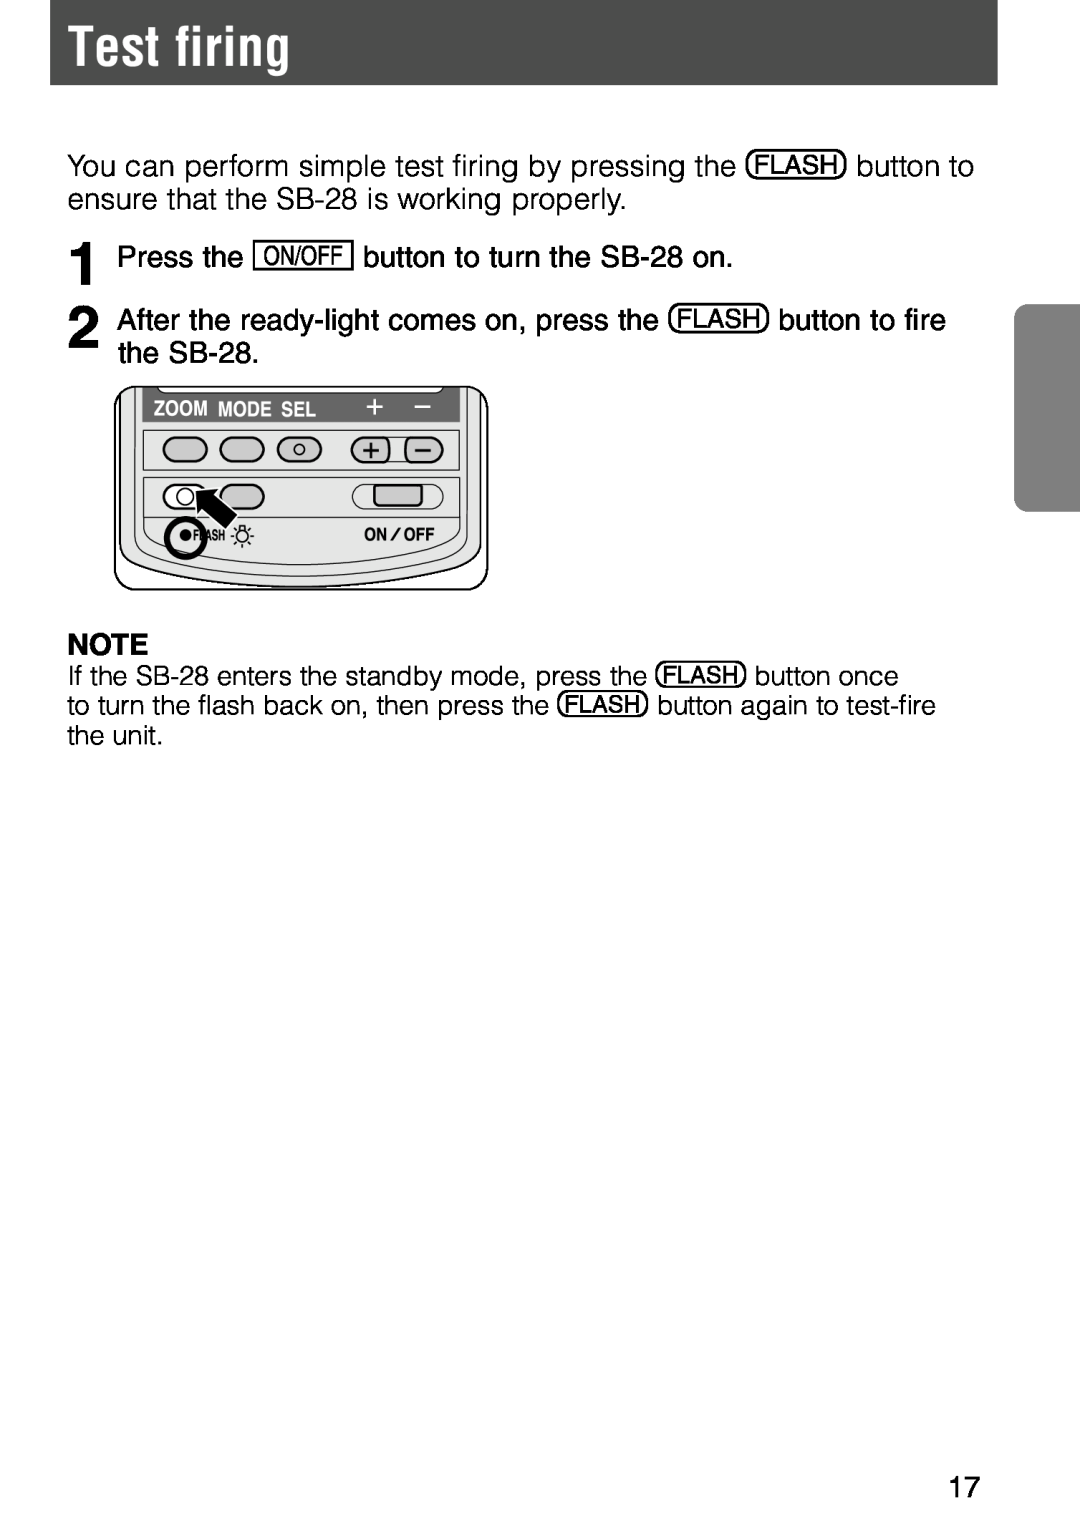 Nikon instruction manual Test firing, 1Press the = button to turn the SB-28on 